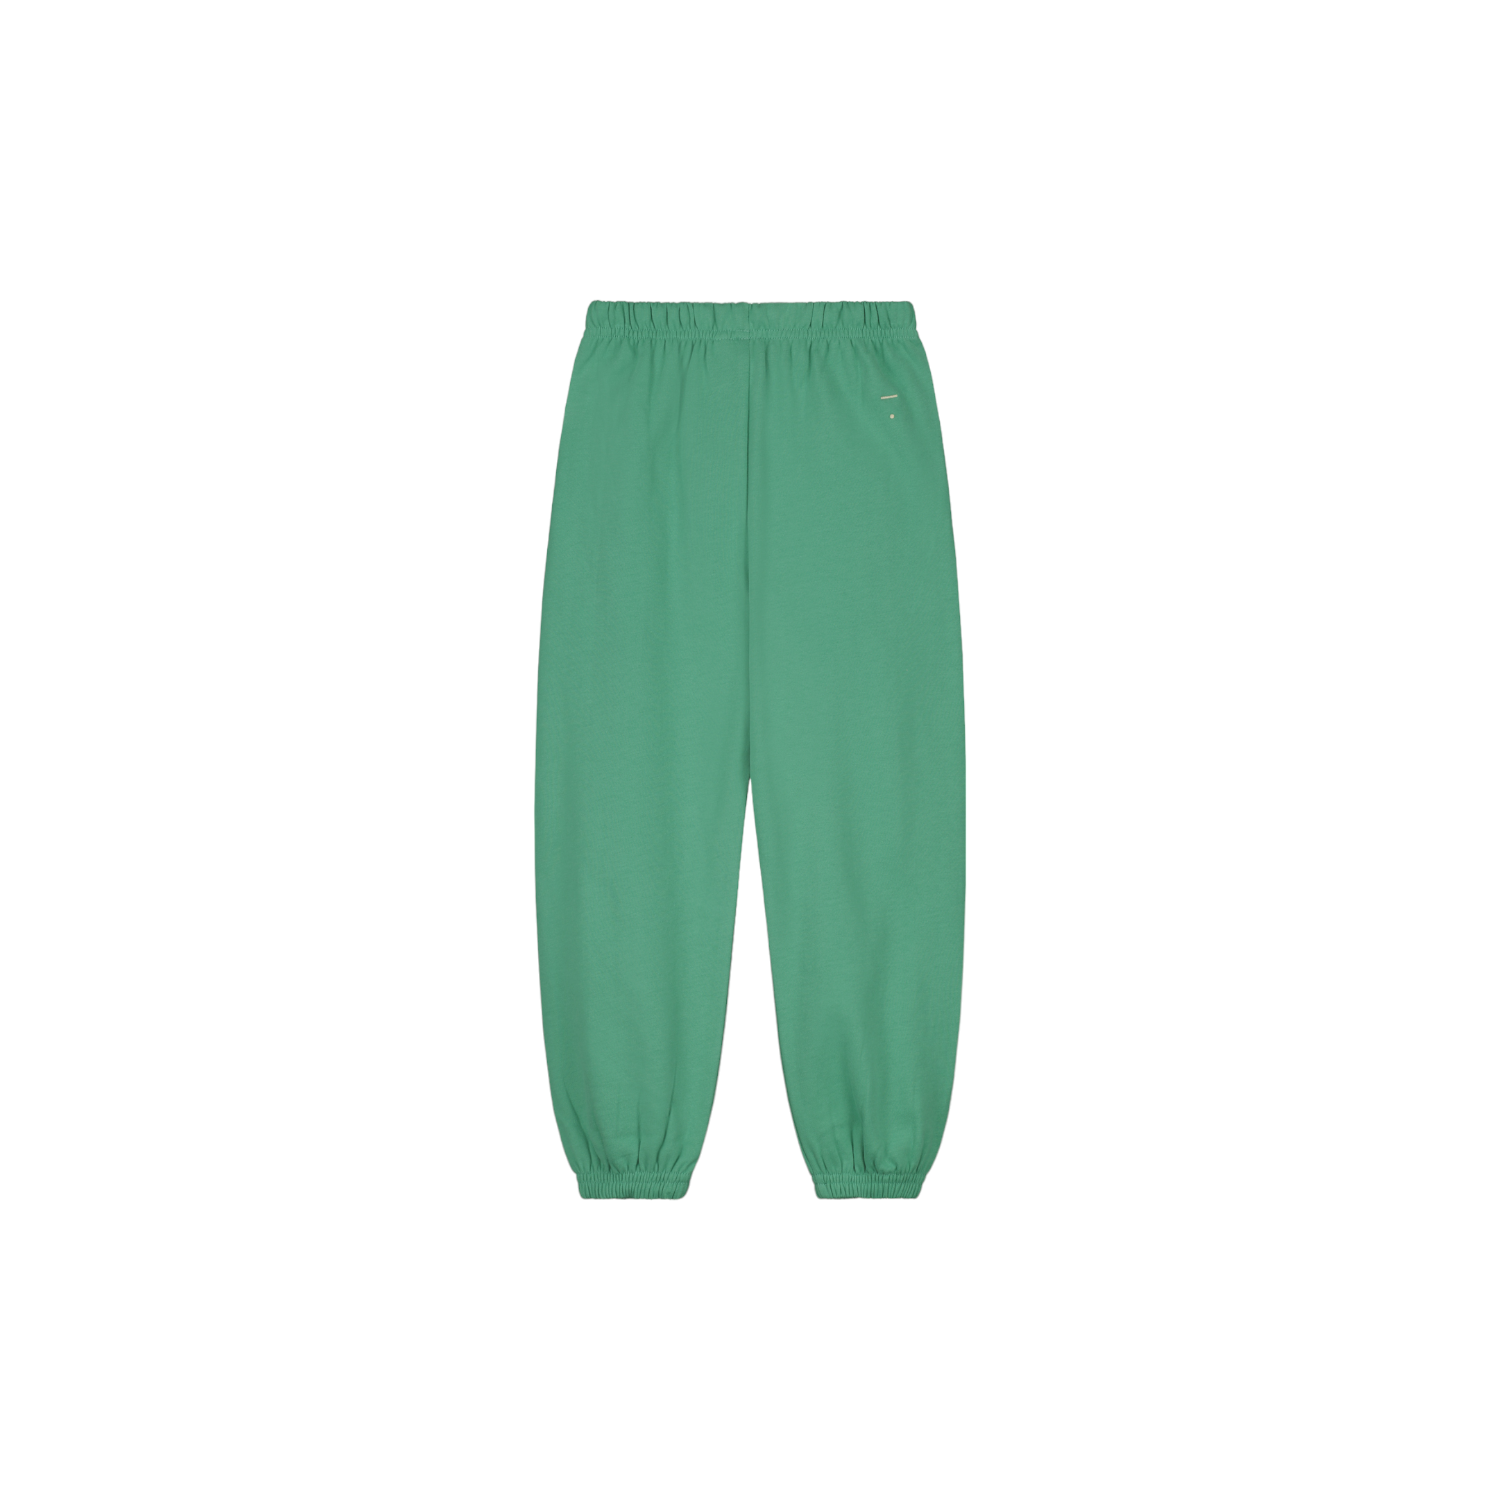 Gray Label - 兒童刷毛運動褲 - Bright Green